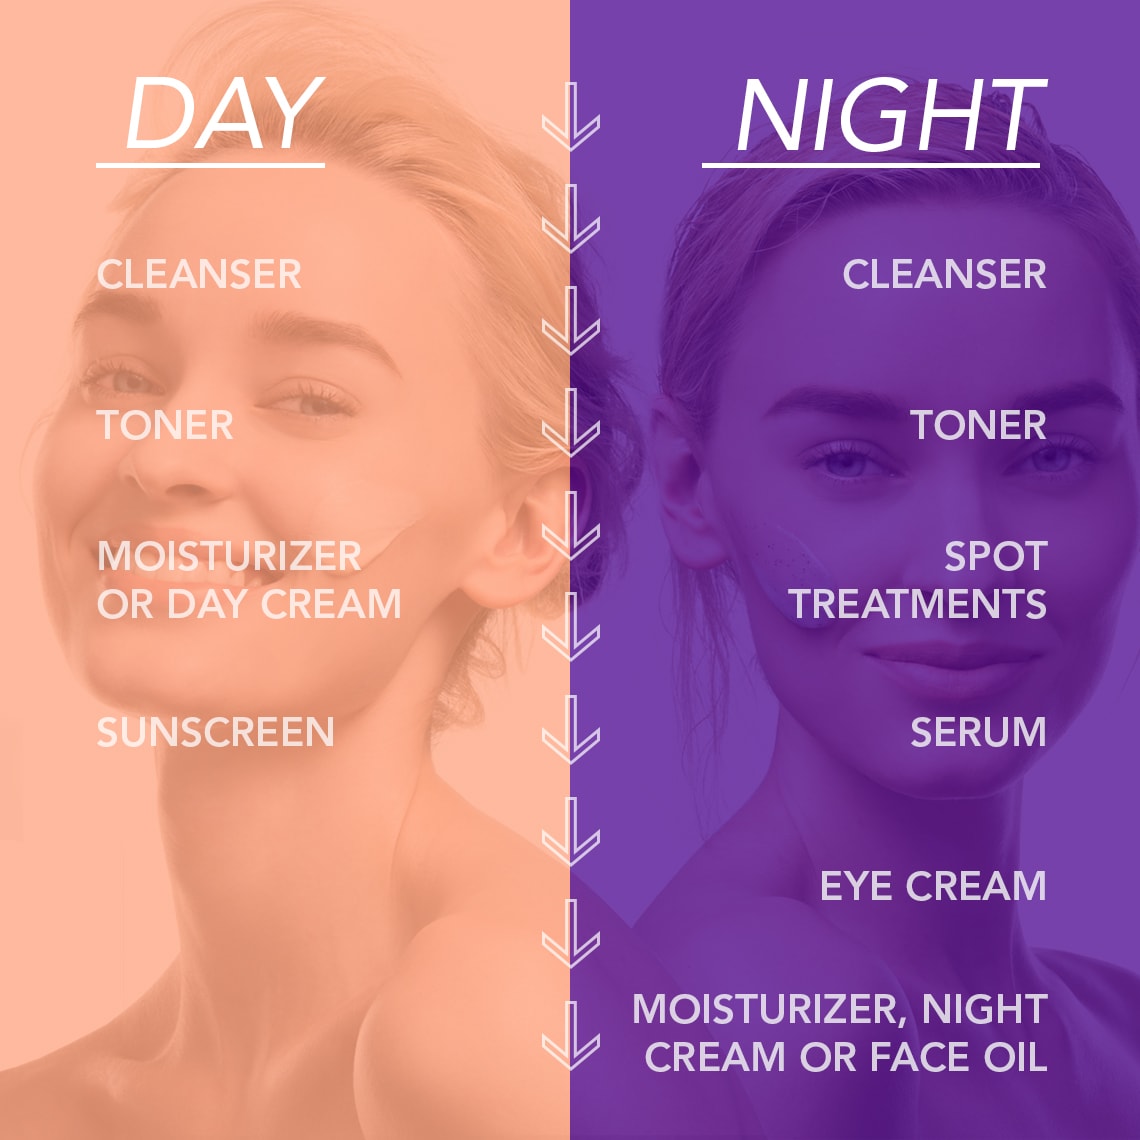 Skincare-routine-day-vs-night_2-min.jpg